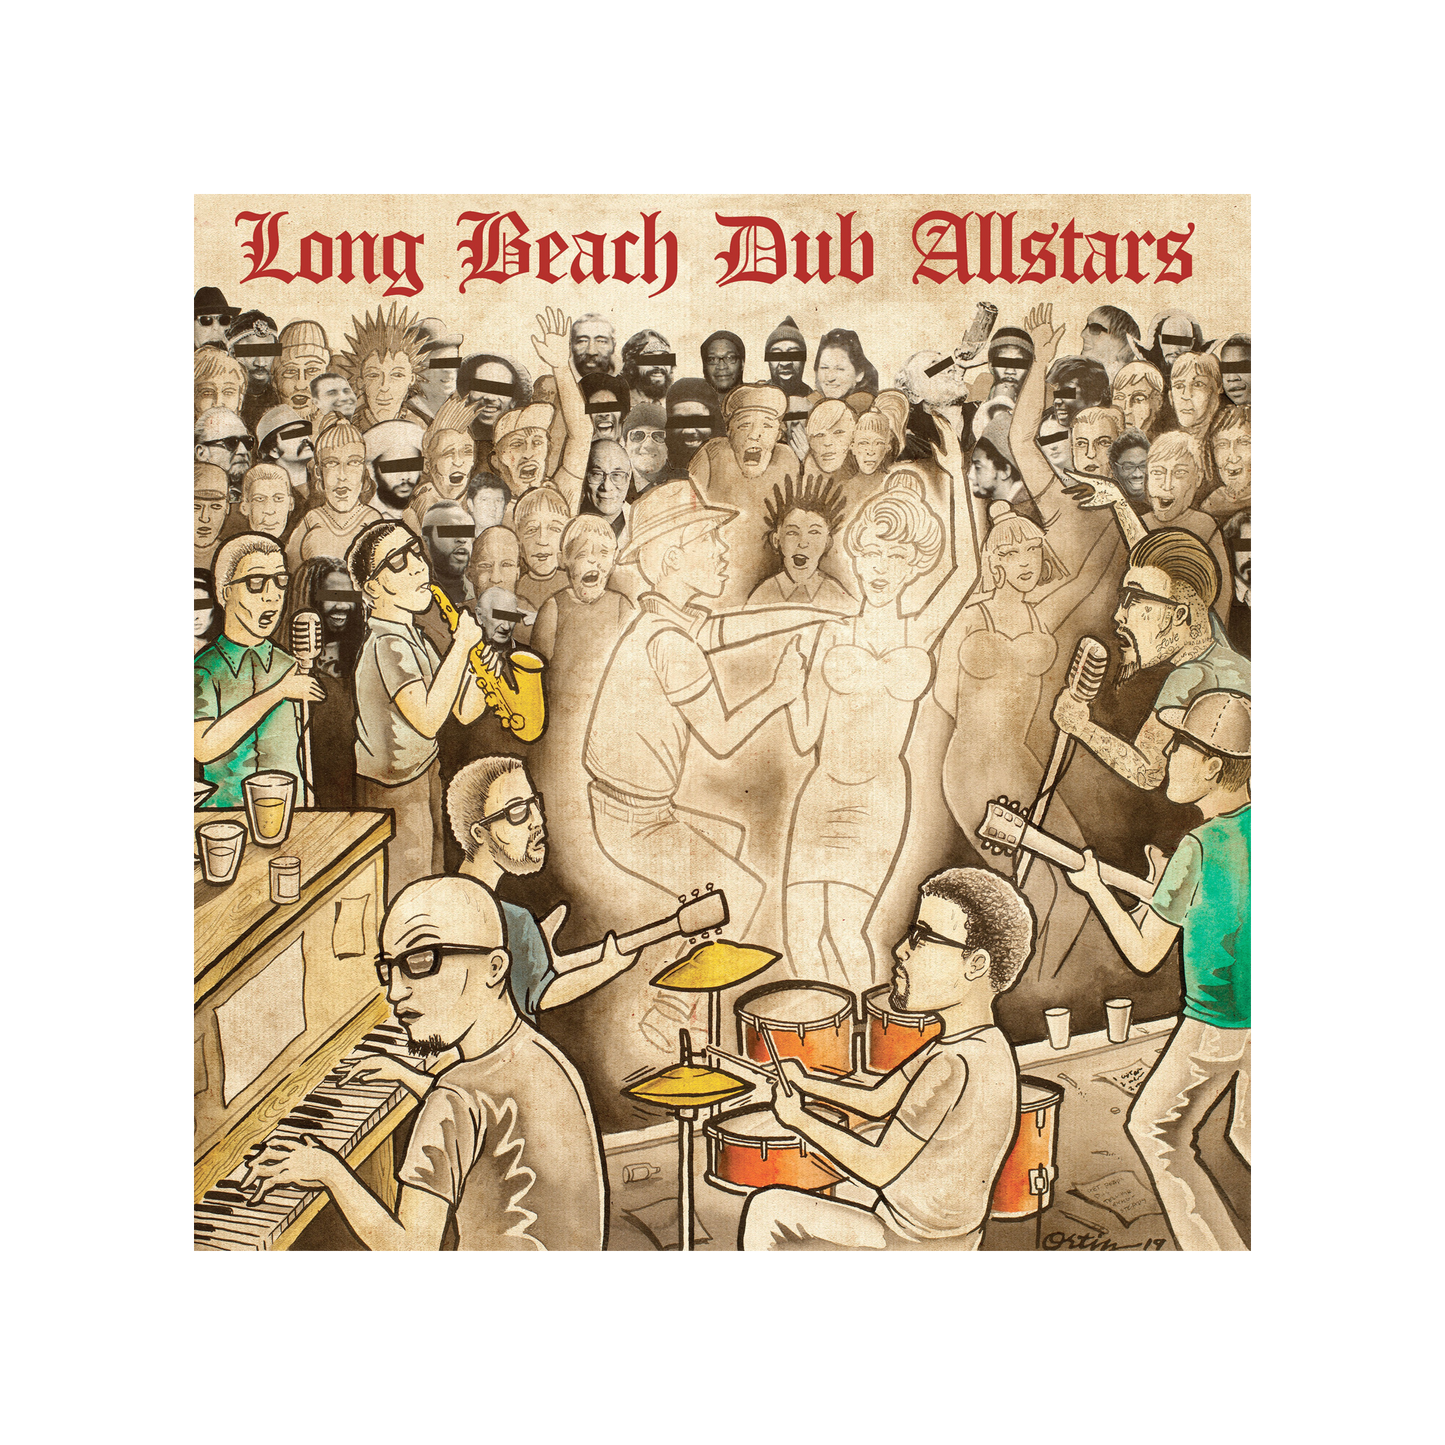 Long Beach Dub Allstars - Long Beach Dub Allstars Digital Download